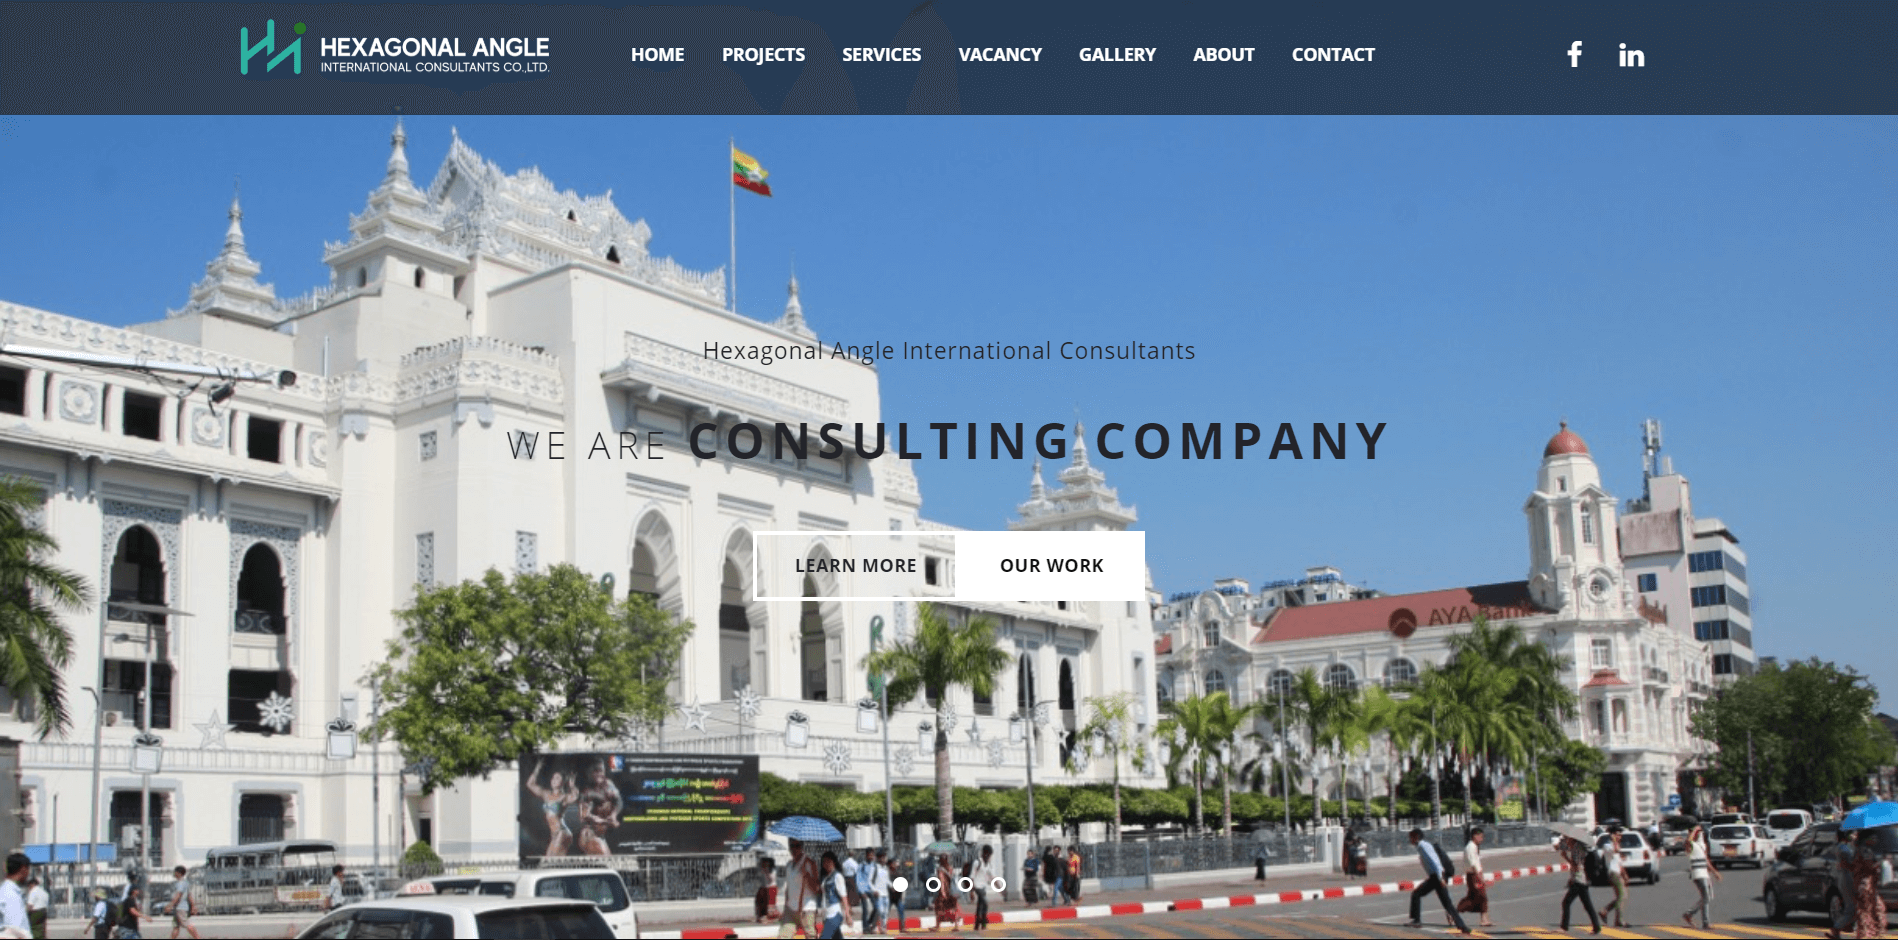 Hexagonal Angle International Consultants - Website